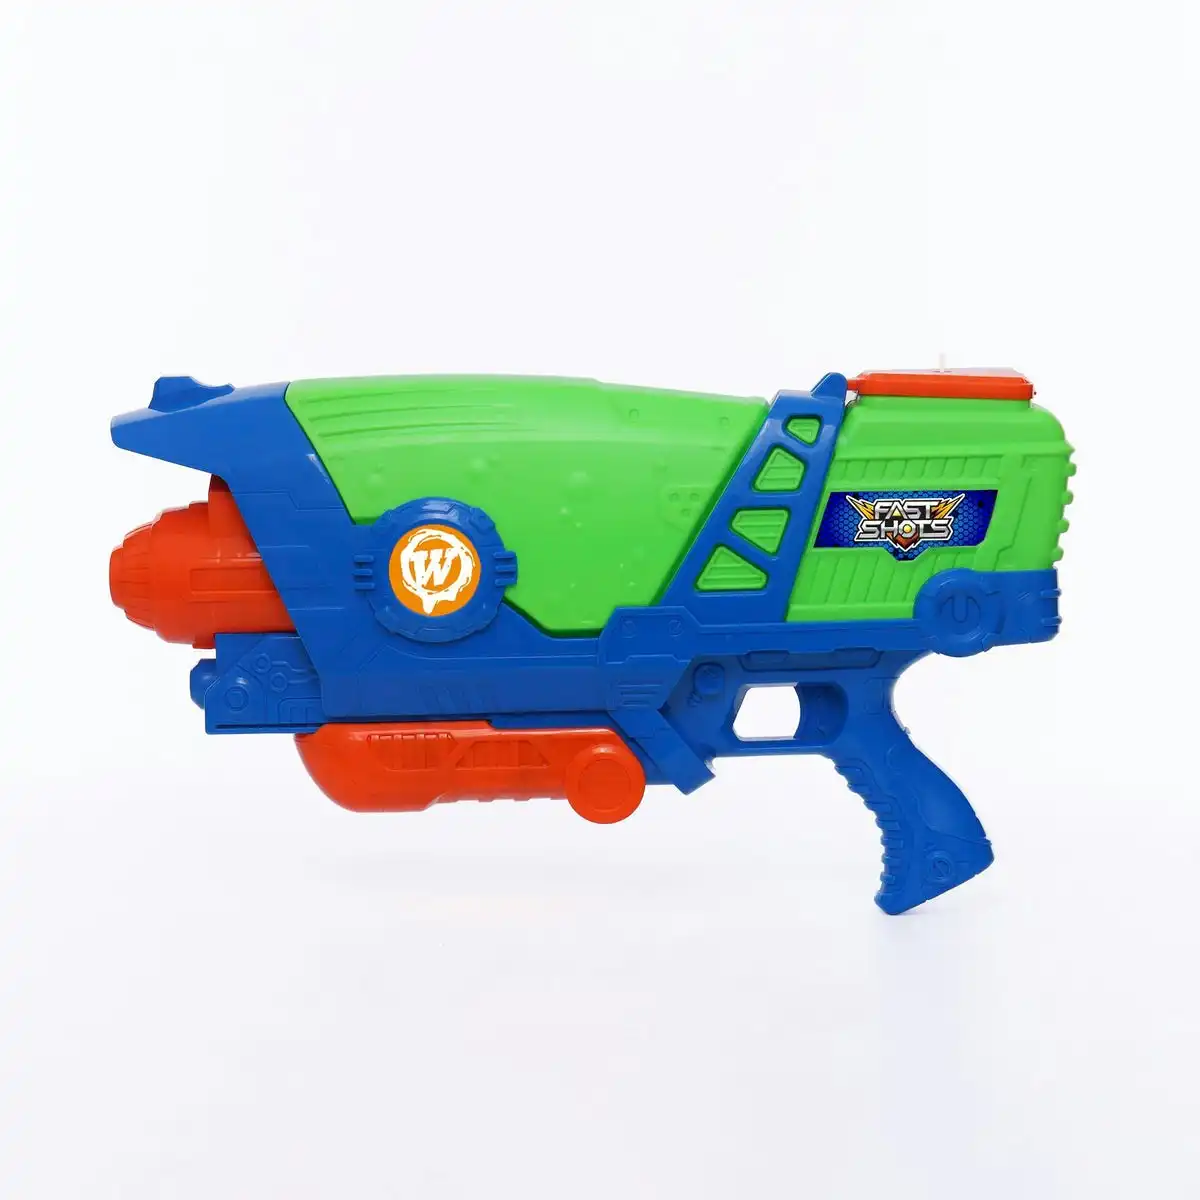 Fast Shots Aqua Blaster Extinguisher